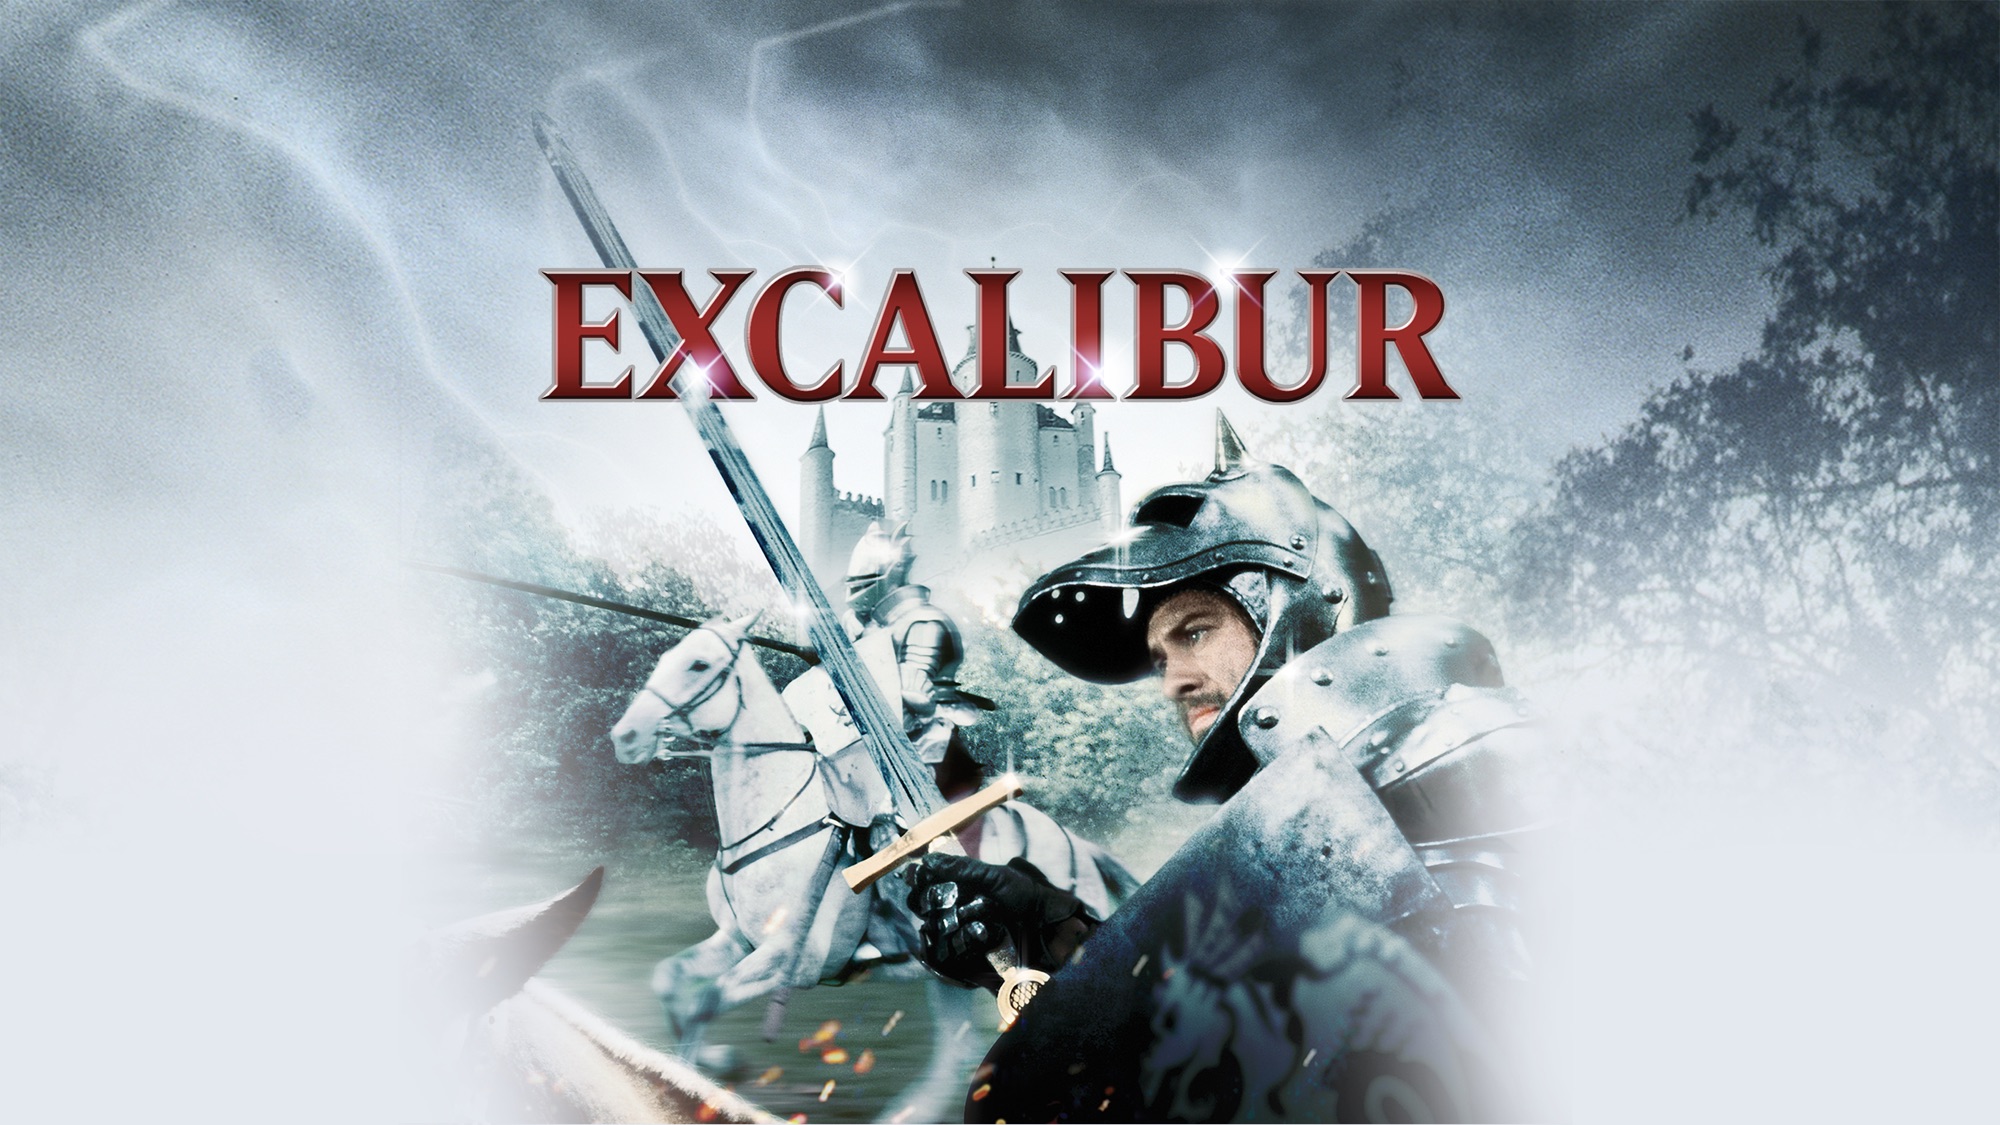 Movie Excalibur HD Wallpaper | Background Image